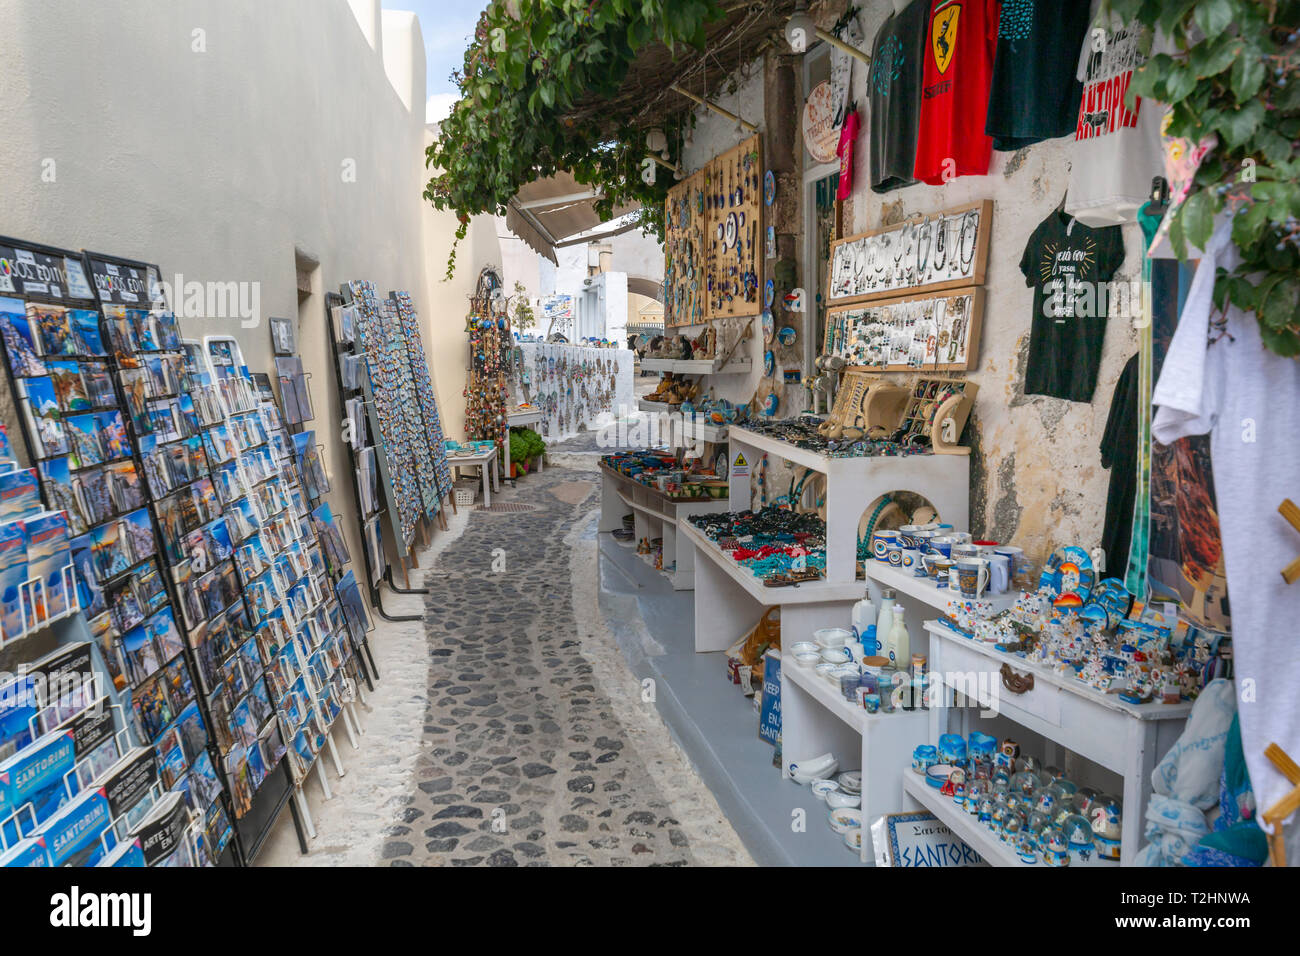 View of souvenirs on street in Pyrgos, Thira, Santorini, Cyclades Islands, Greece, Europe Stock Photo